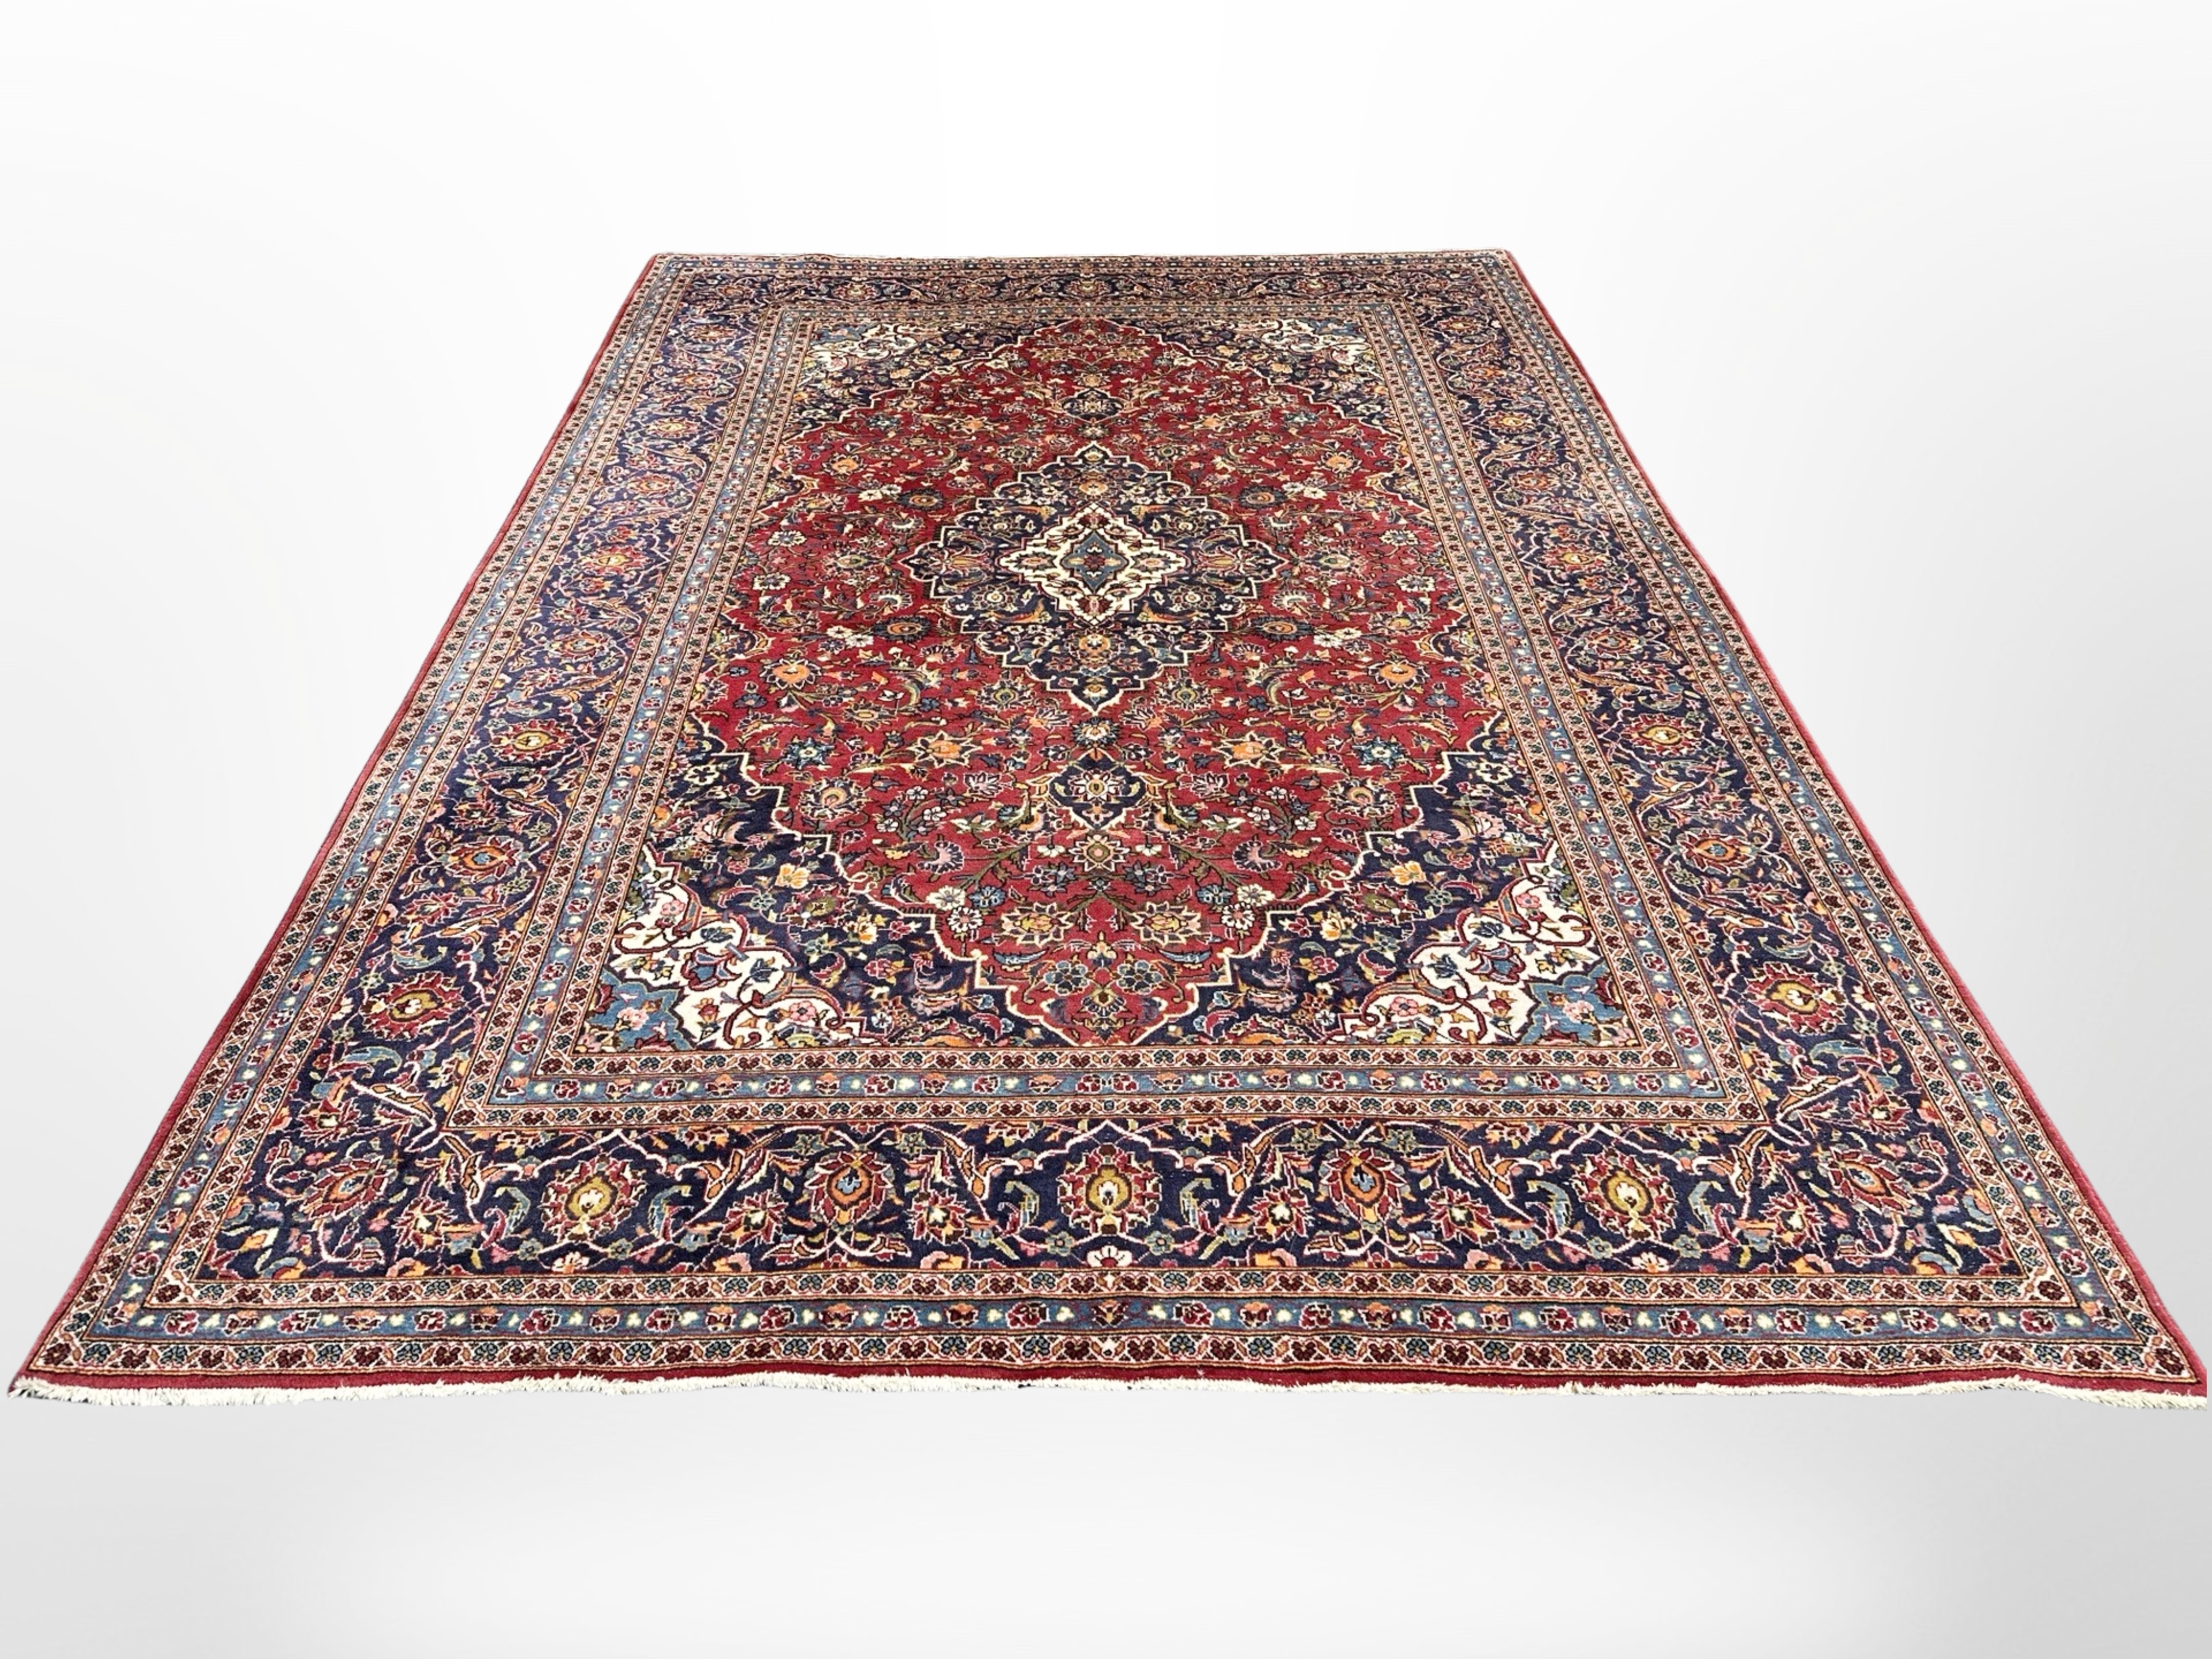 A Kashan carpet, Isfahan Province, Central Iran,